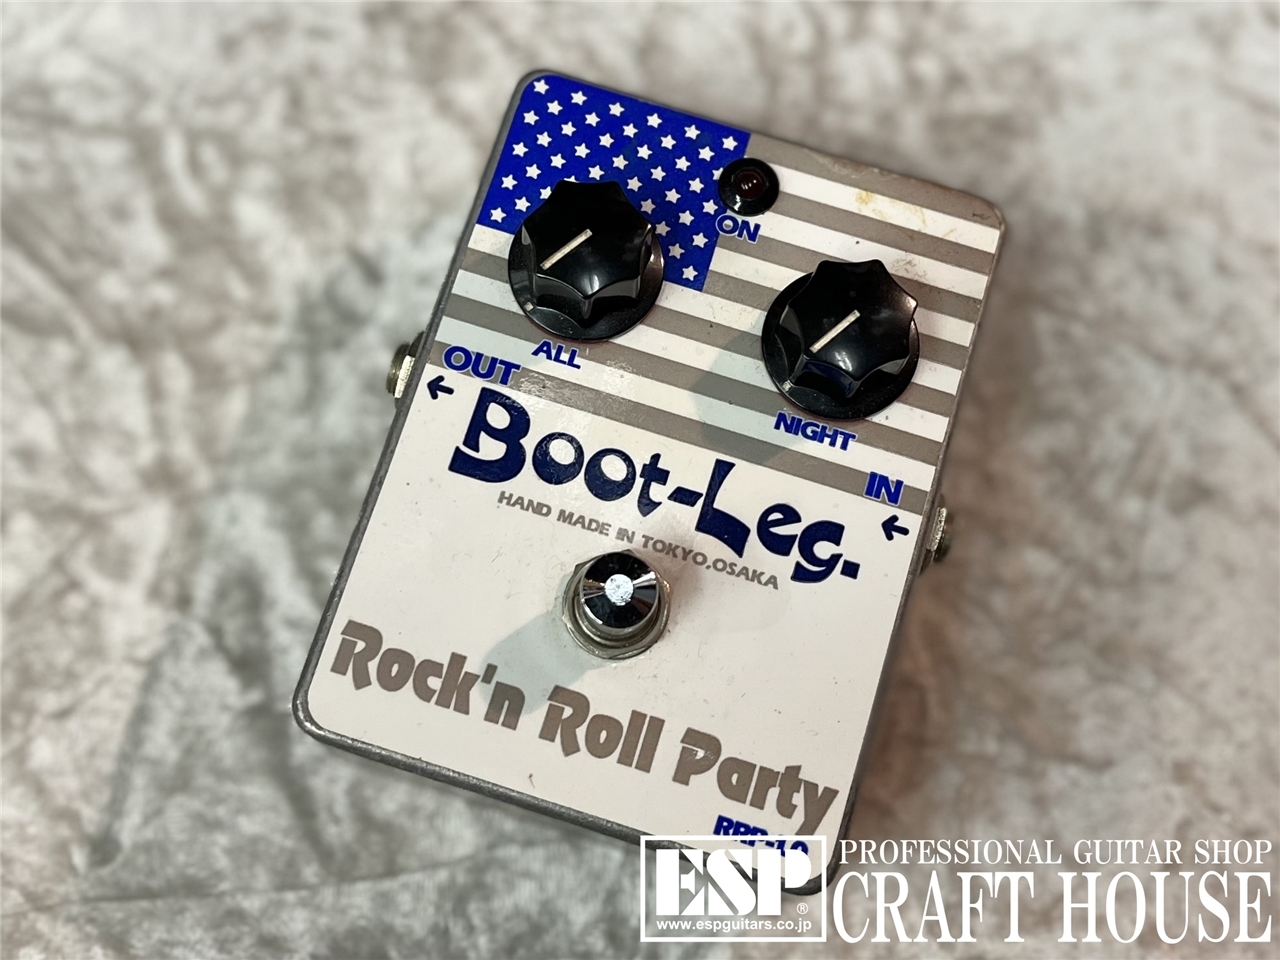 Boot-Leg RRP-1.0 Rockn Roll Party